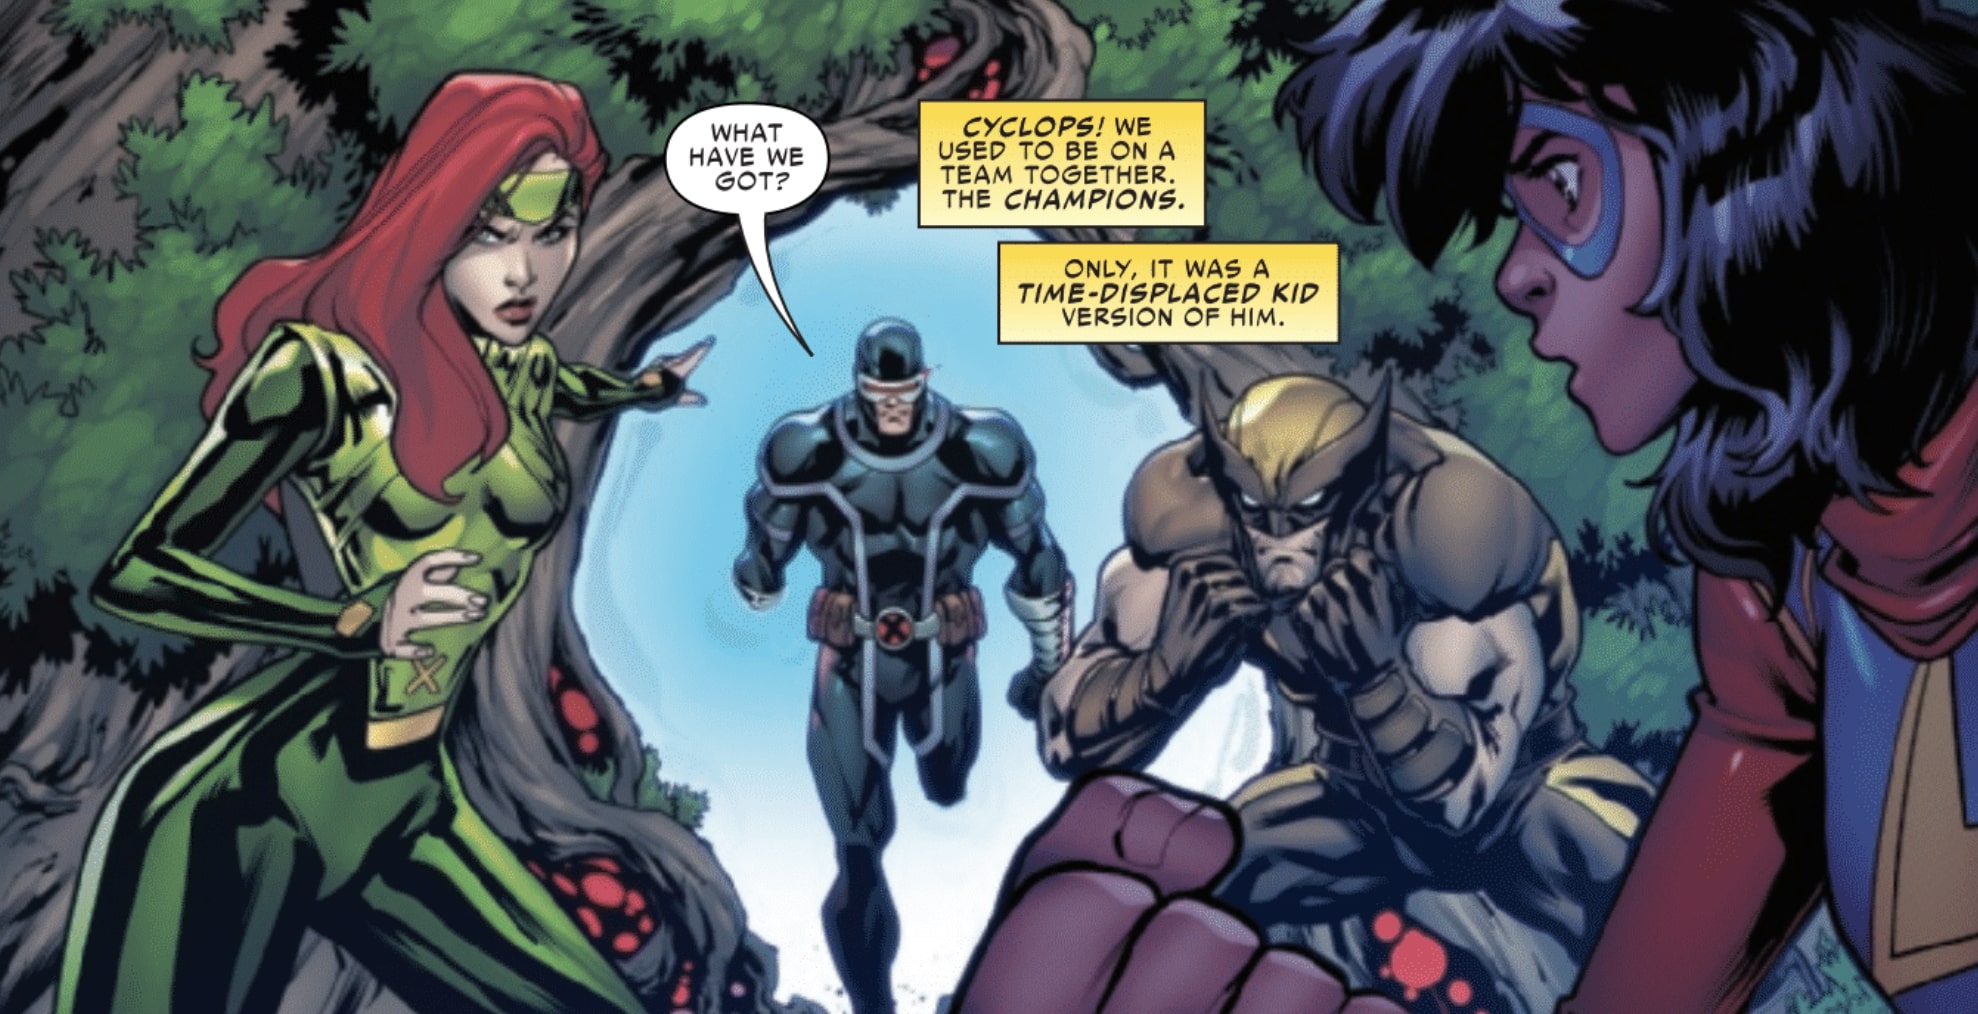 Cyclops arrives through a Krakoa portal and Ms Marvel reflects on their weird continuity.